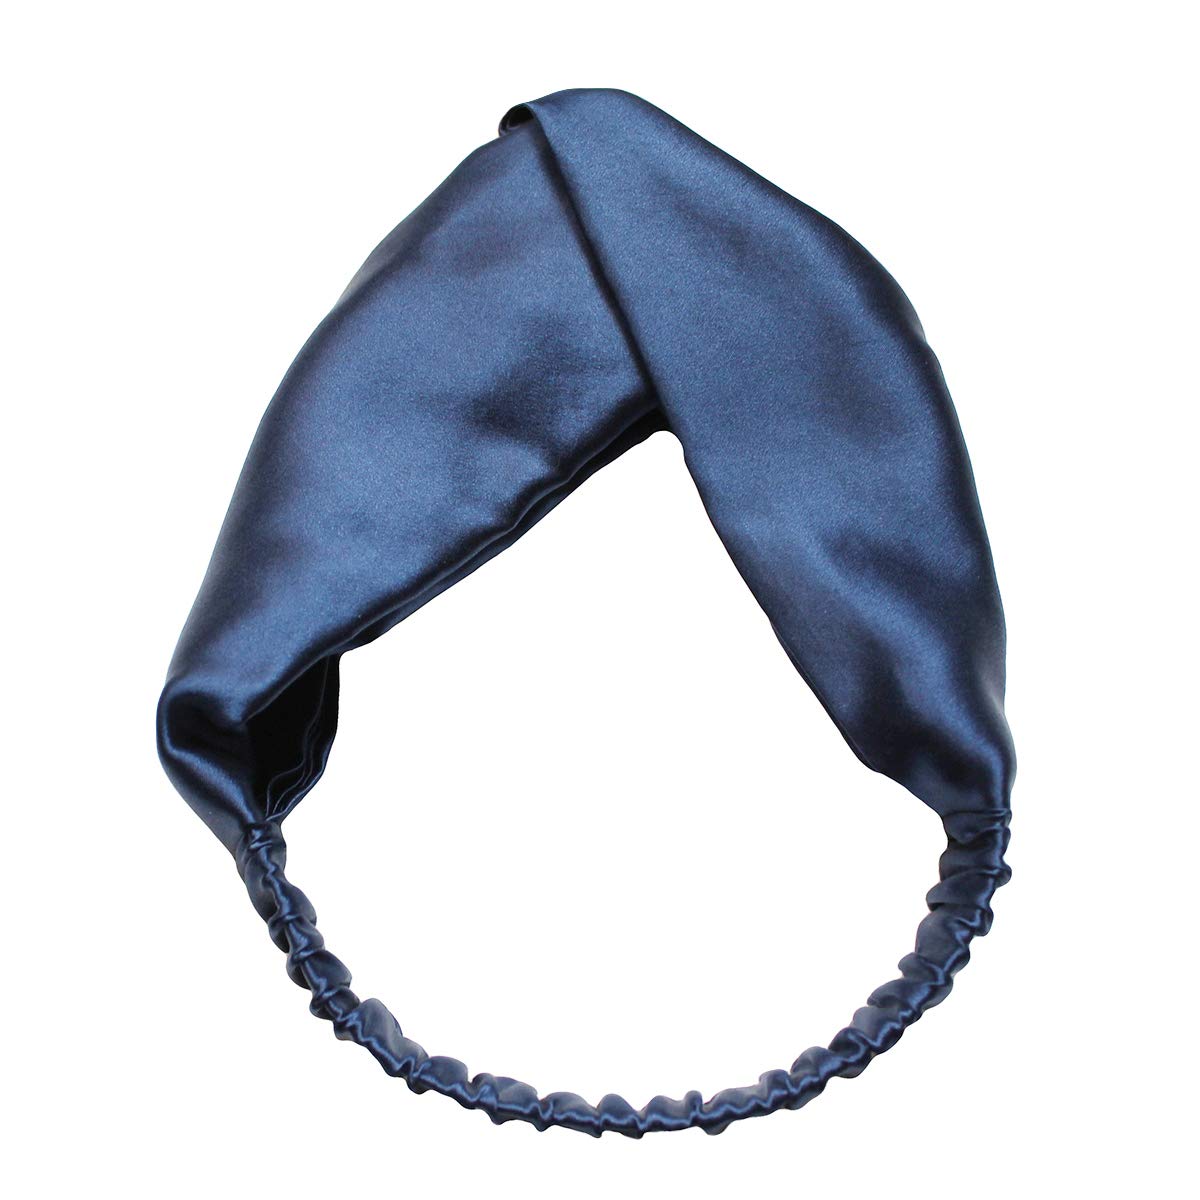 100% Silk Knot Headband